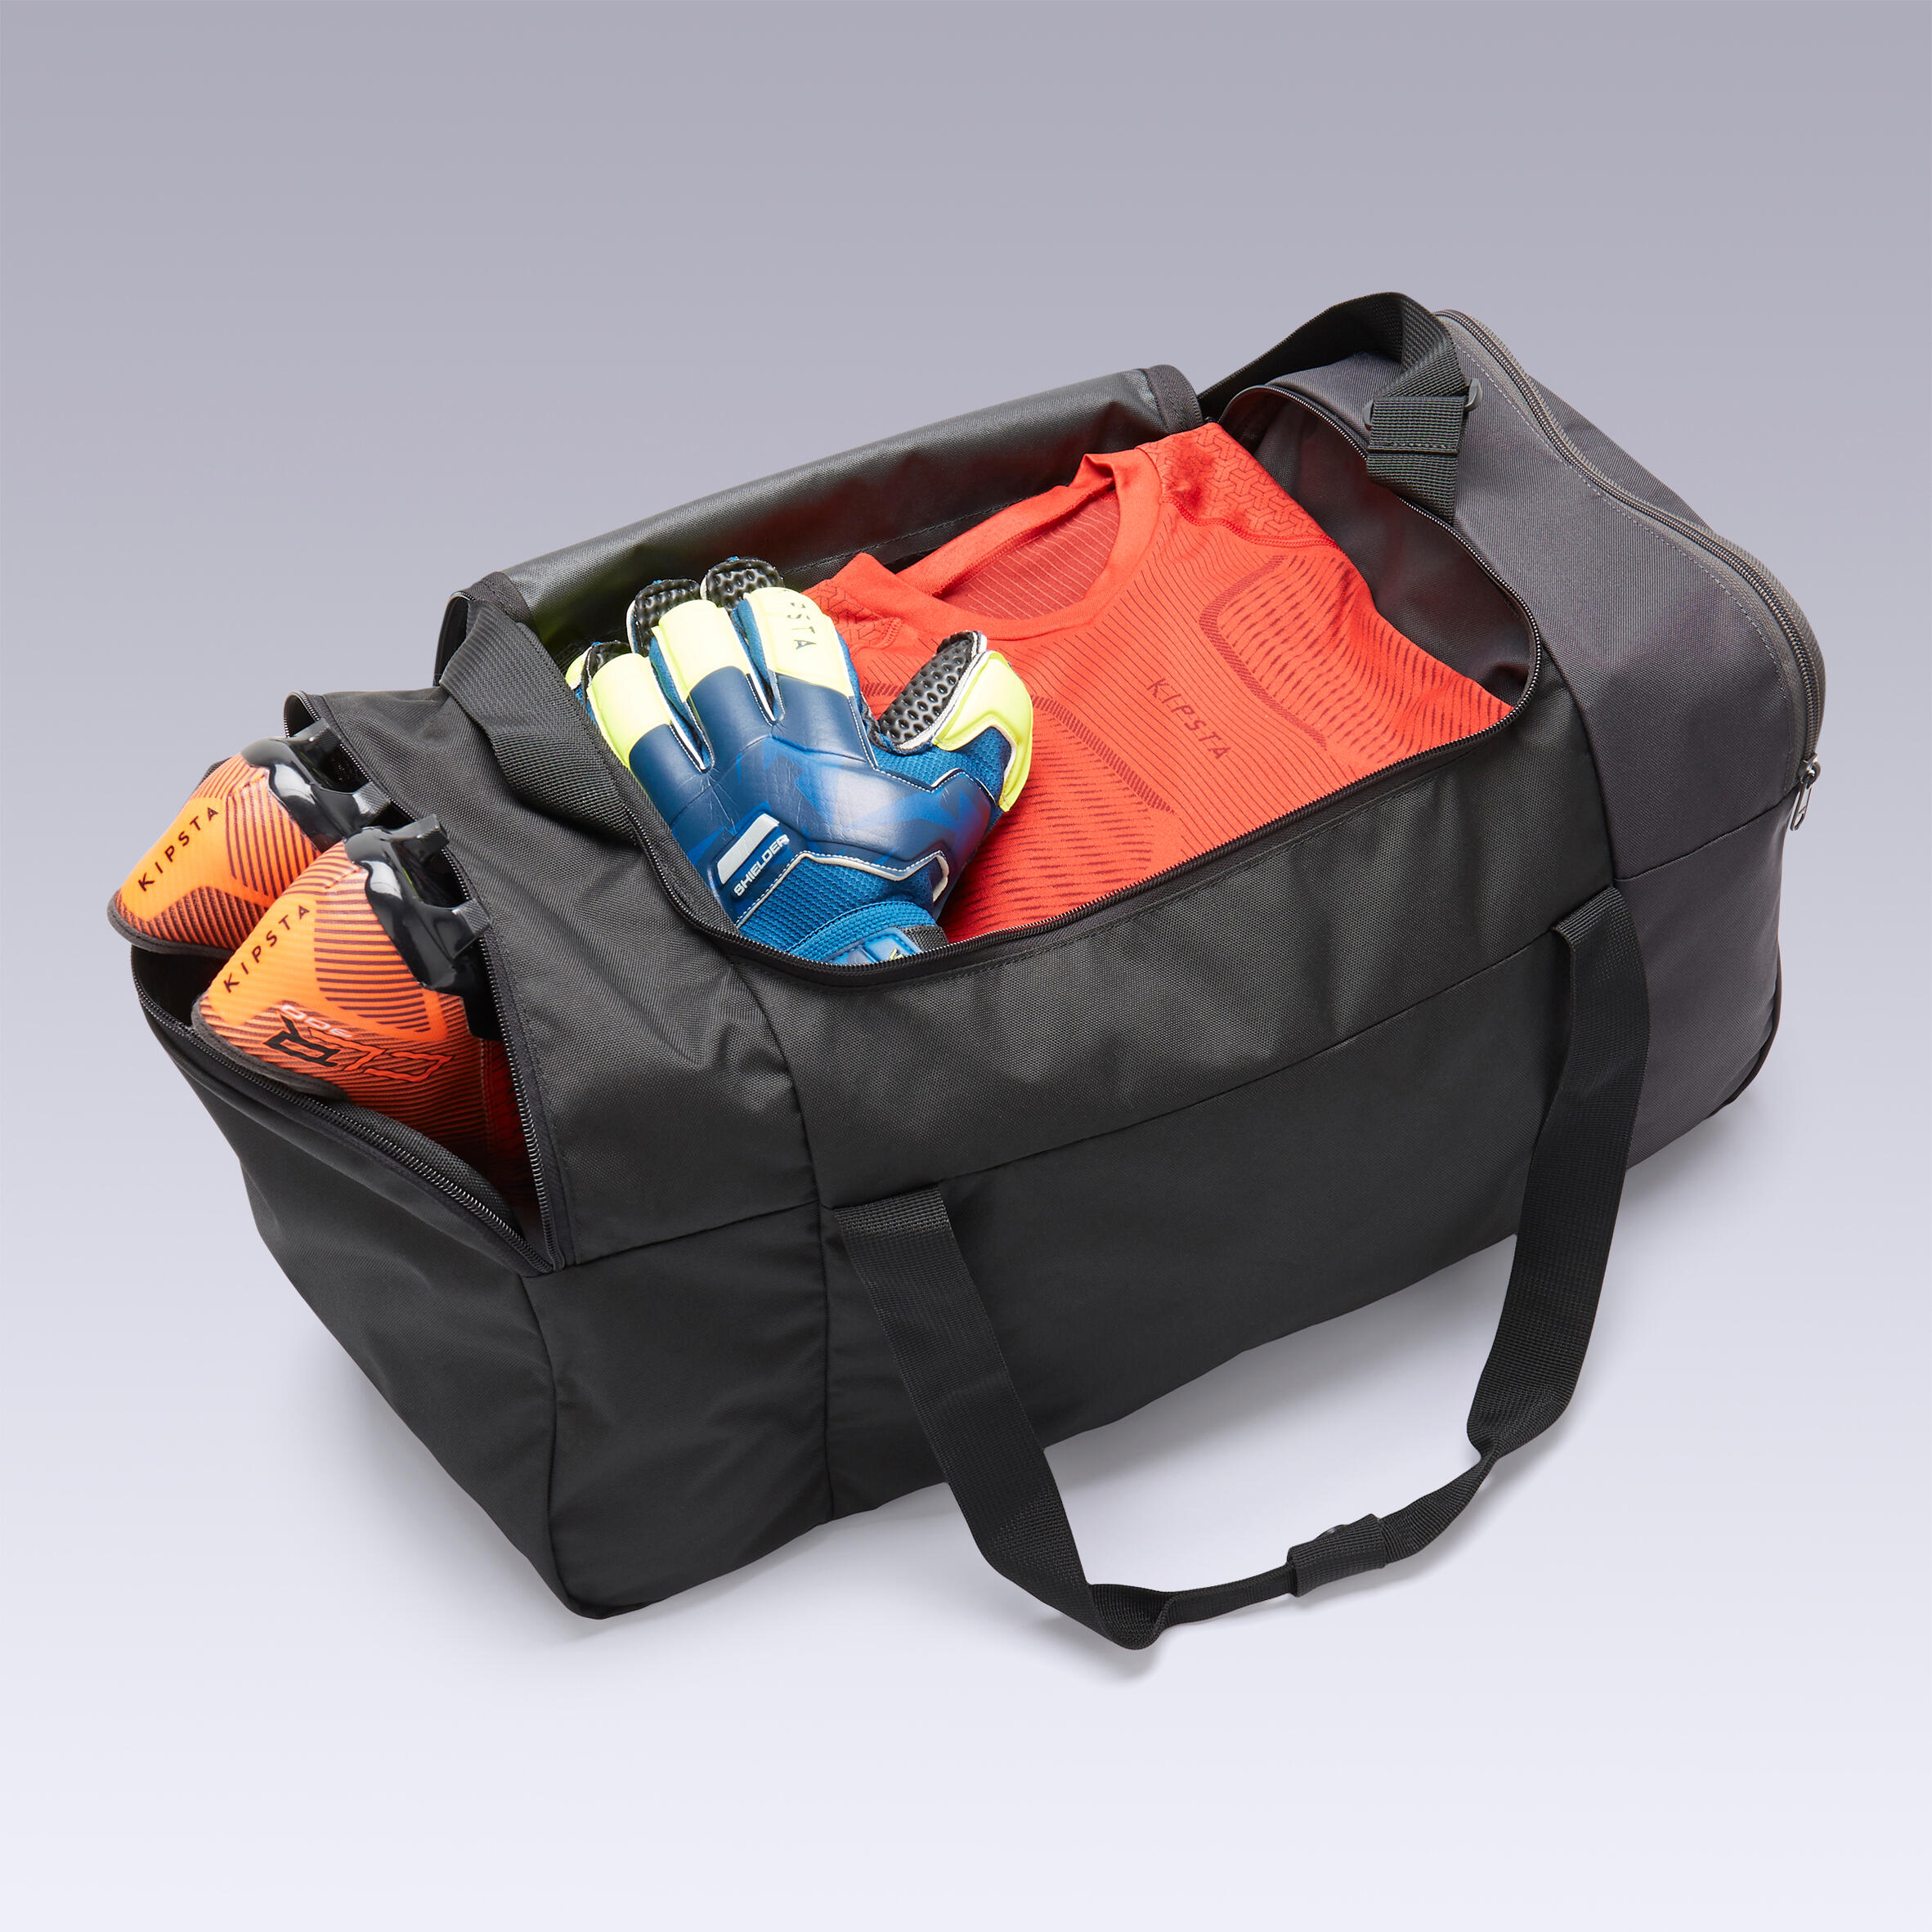 55 L Essential Sports Bag - [EN] graphite grey, [EN] smoked black